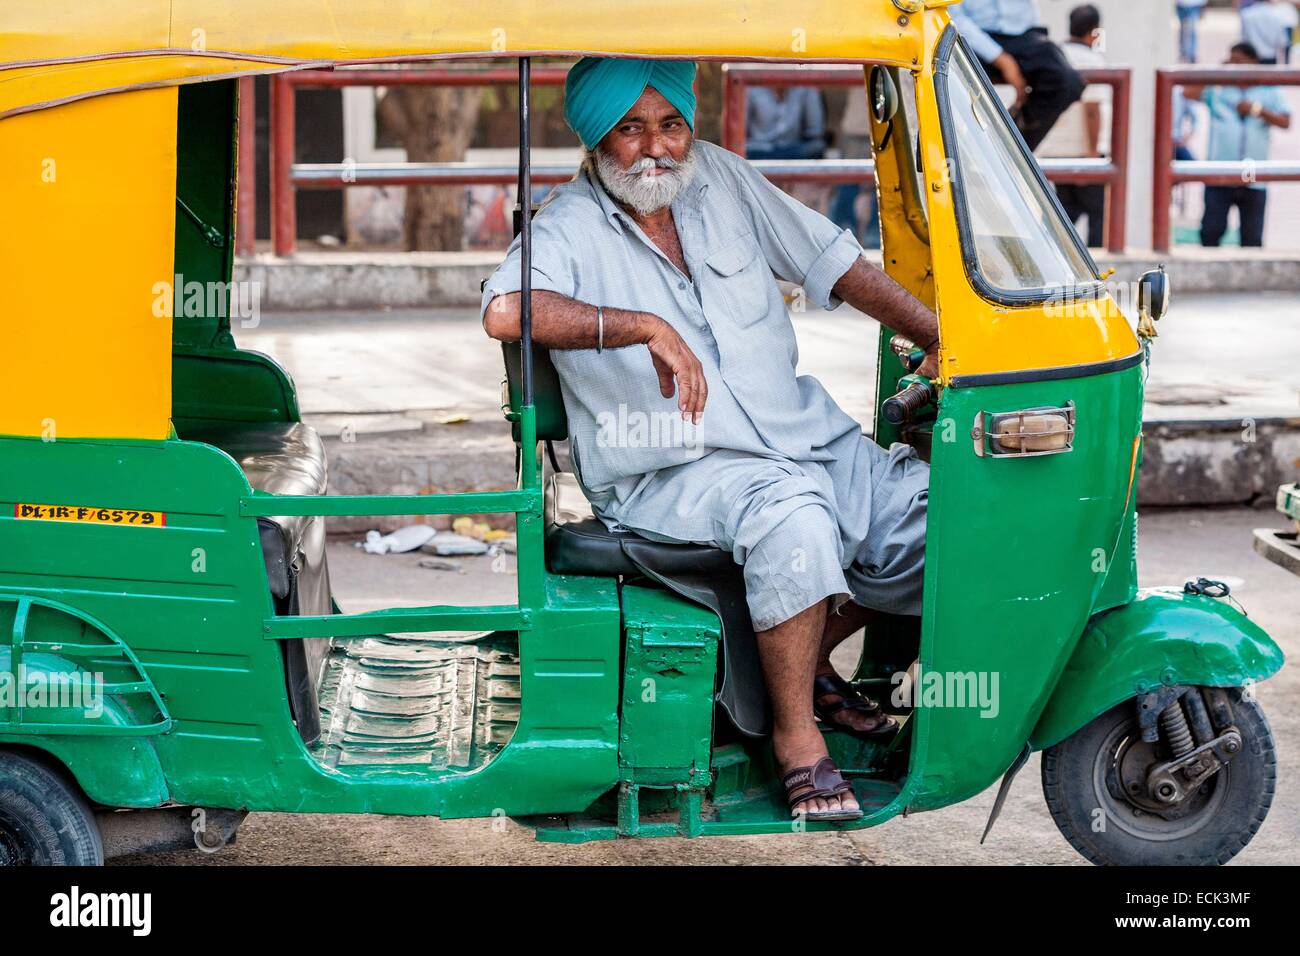 India, New Delhi, Connaught Place, motorized rickshaw driver Stock Photo